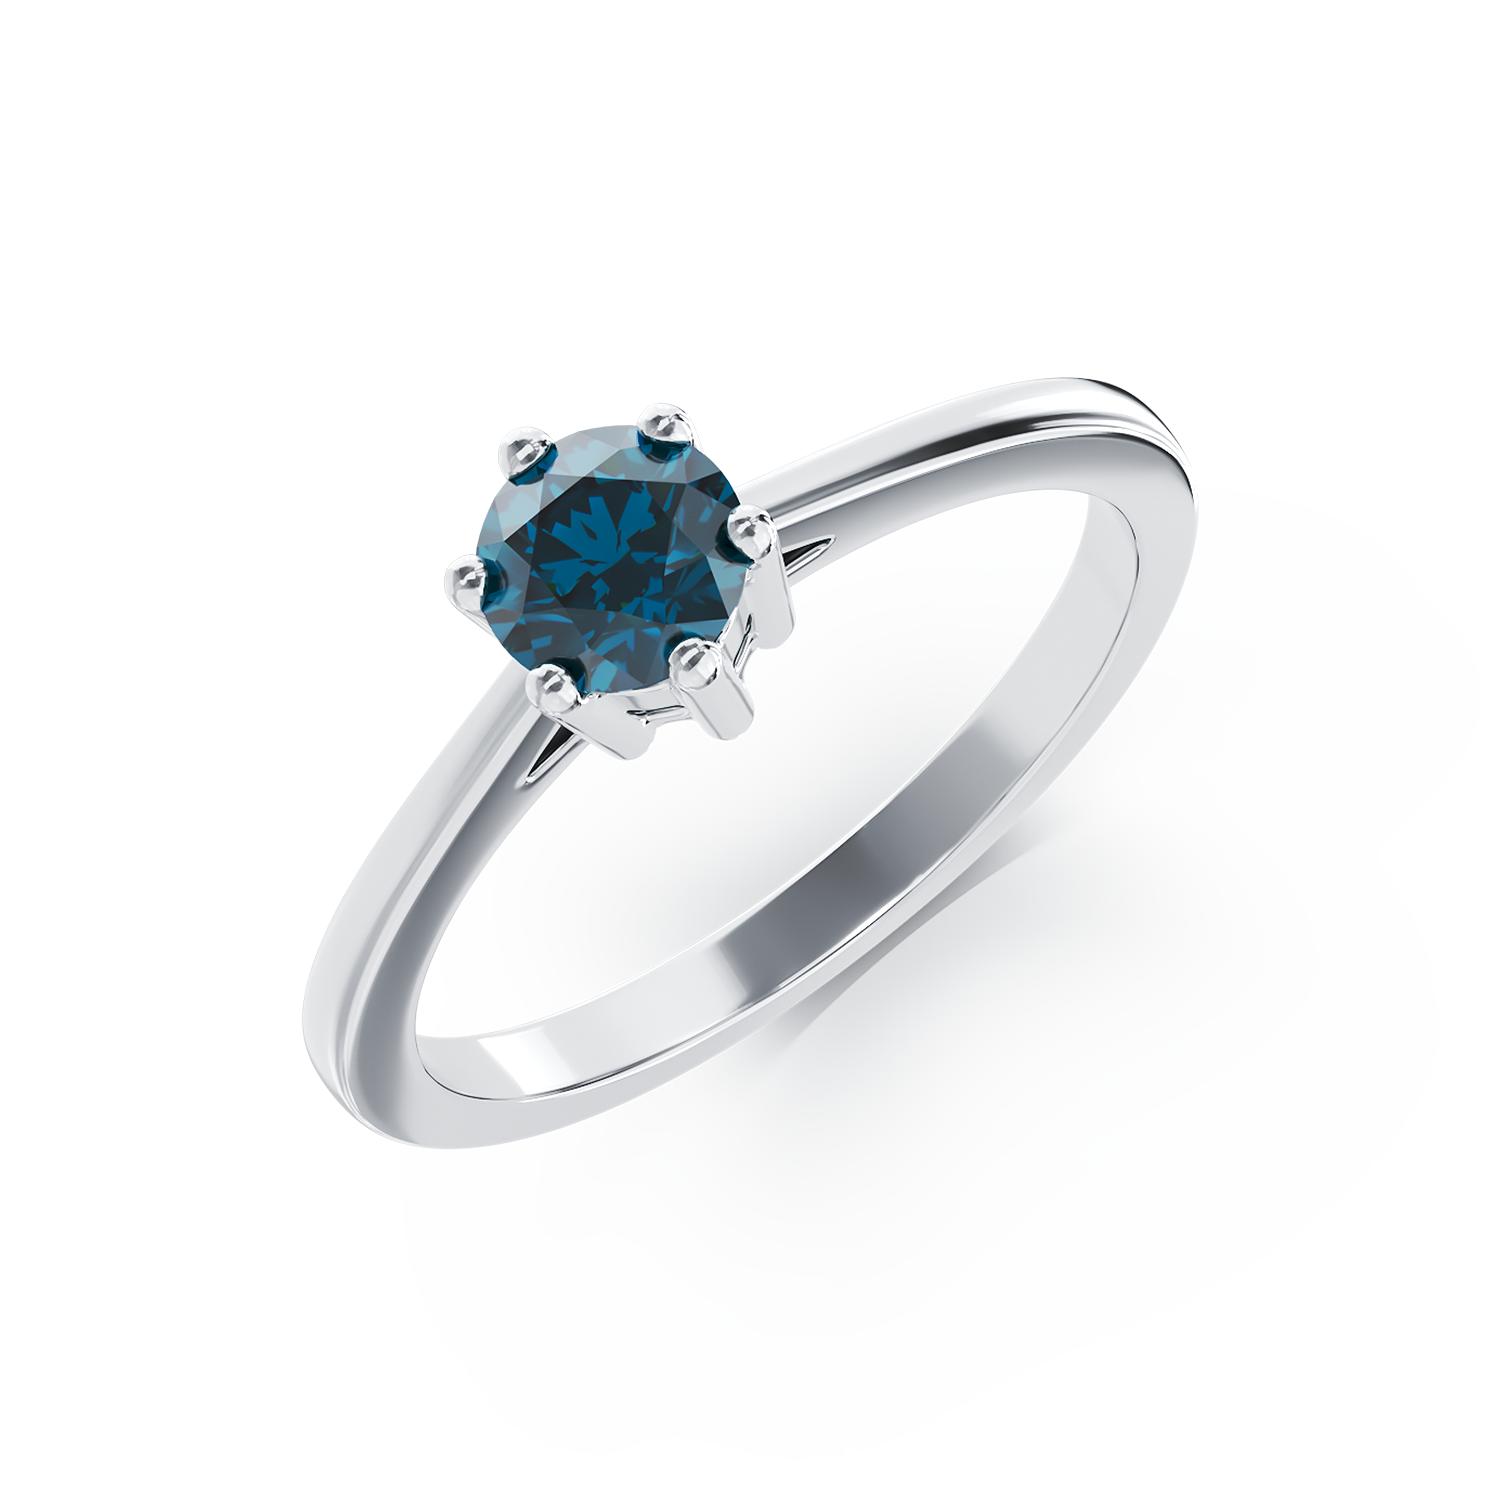 Inel de logodna din aur alb de 18K cu diamant albastru de 0.51ct